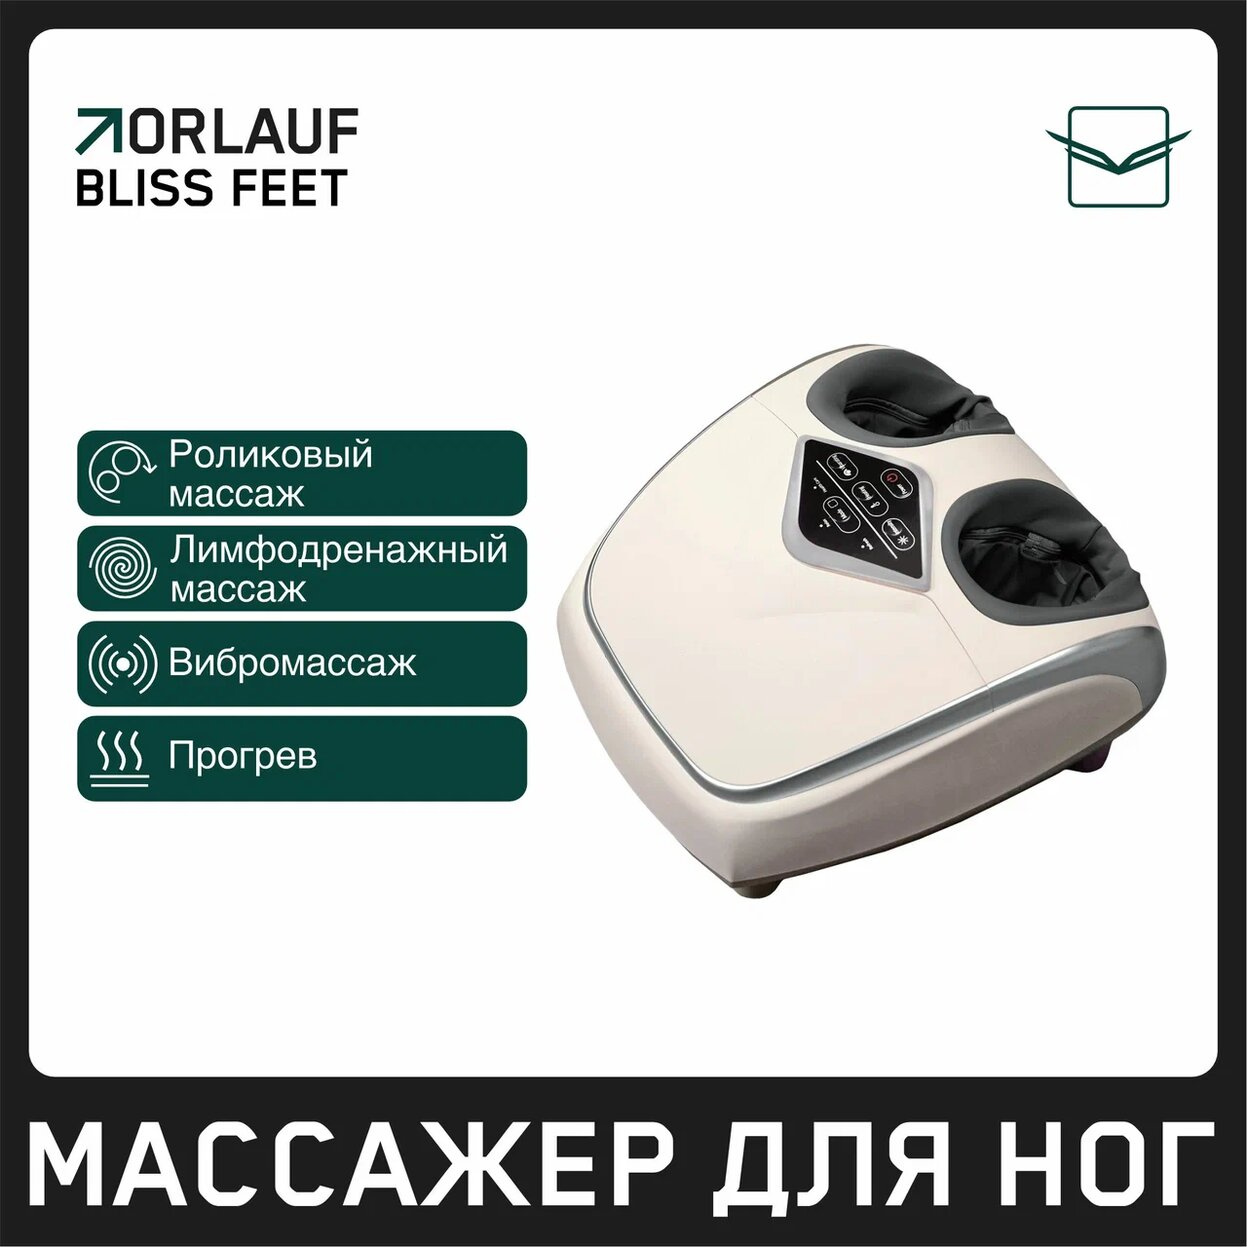 Orlauf Bliss Feet из каталога массажеров для ног в Омске по цене 27600 ₽